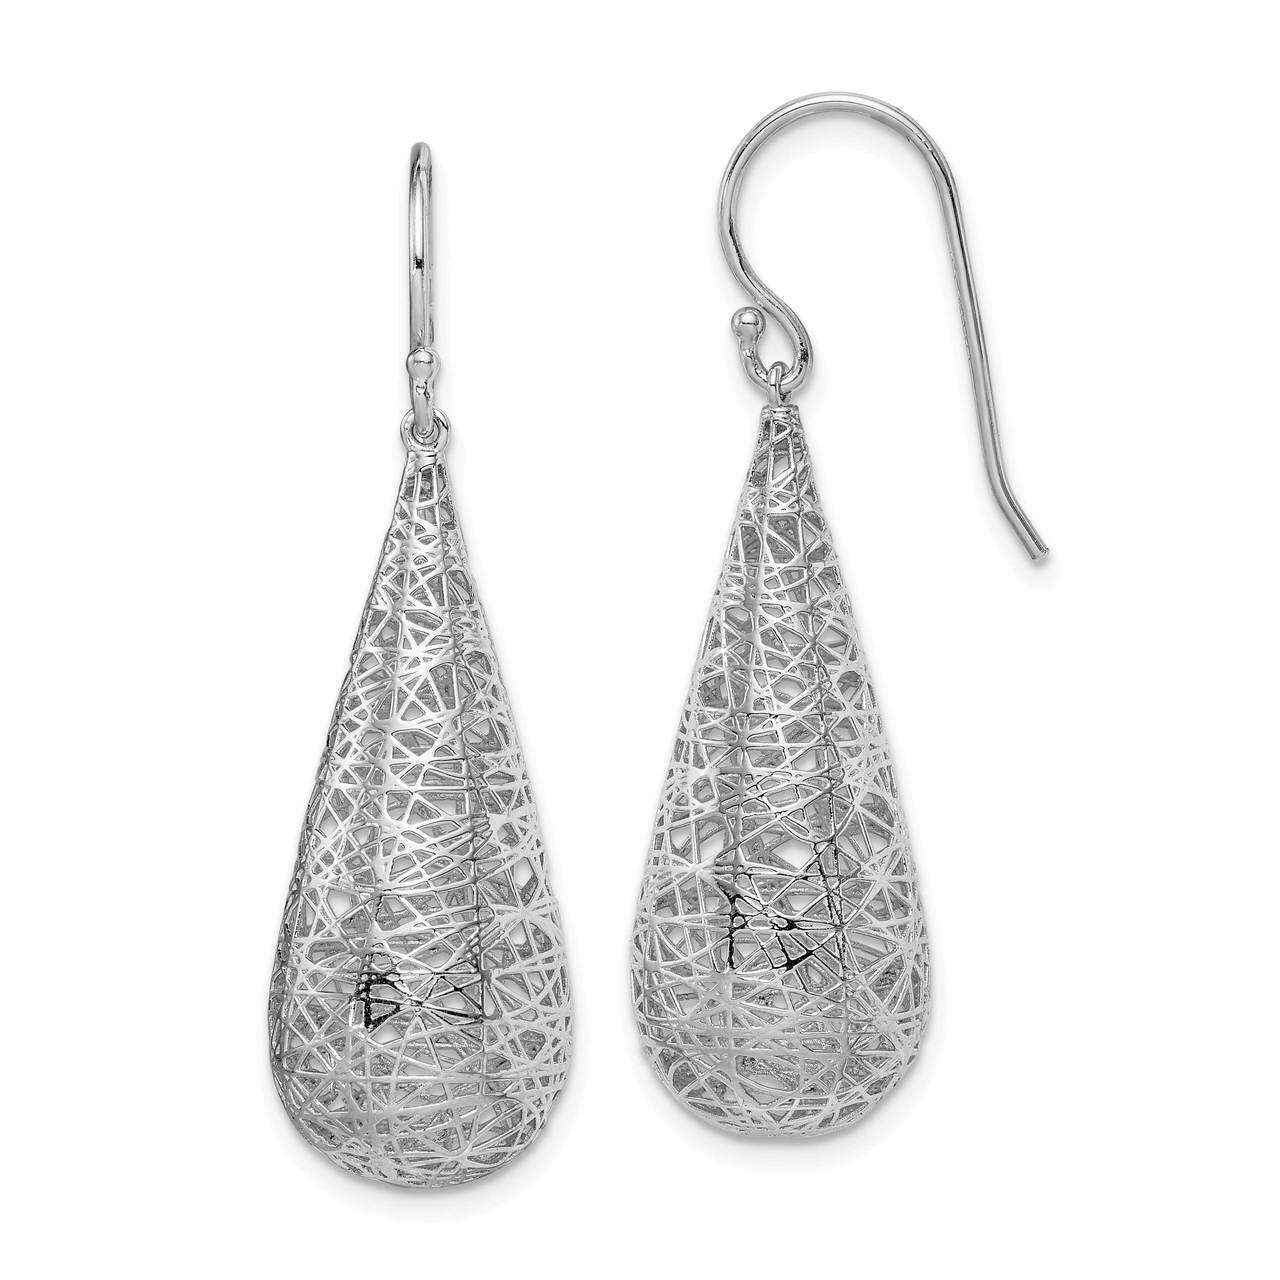 Tear Drop Dangle Earrings Sterling Silver Rhodium-plated QE15005